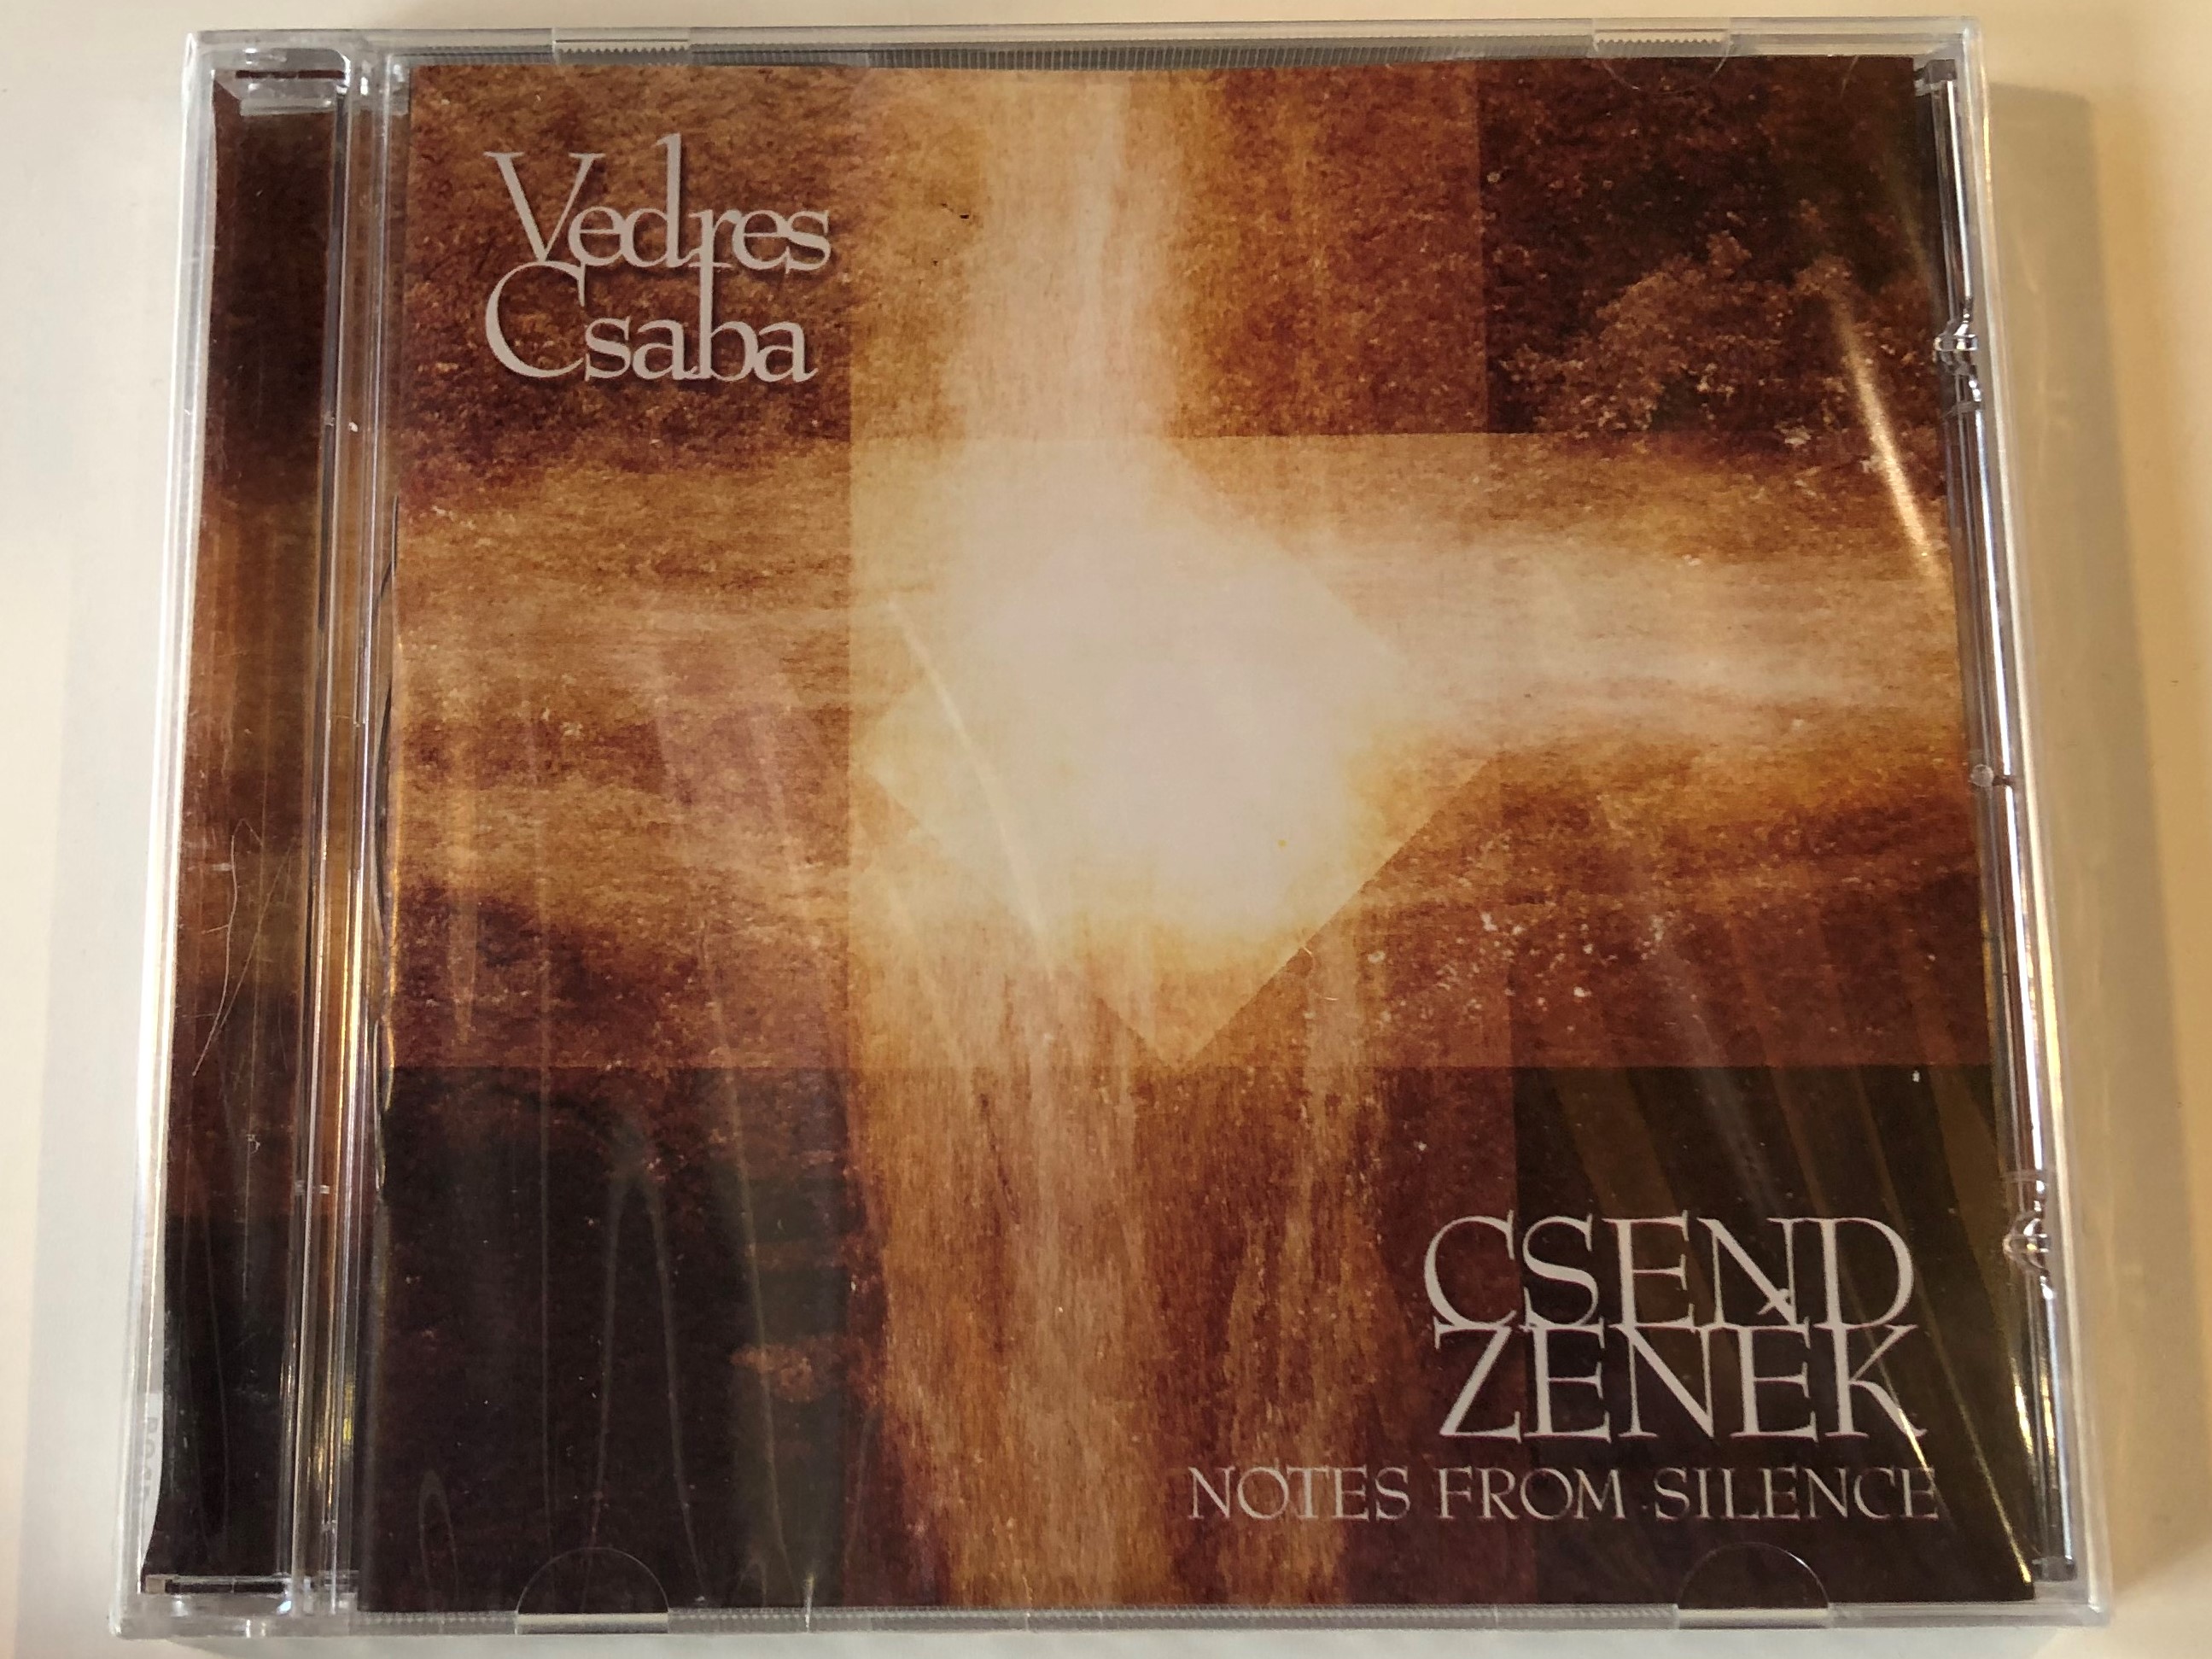 vedres-csaba-csend-zen-k-notes-from-silence-periferic-records-audio-cd-2009-bgcd-207-1-.jpg